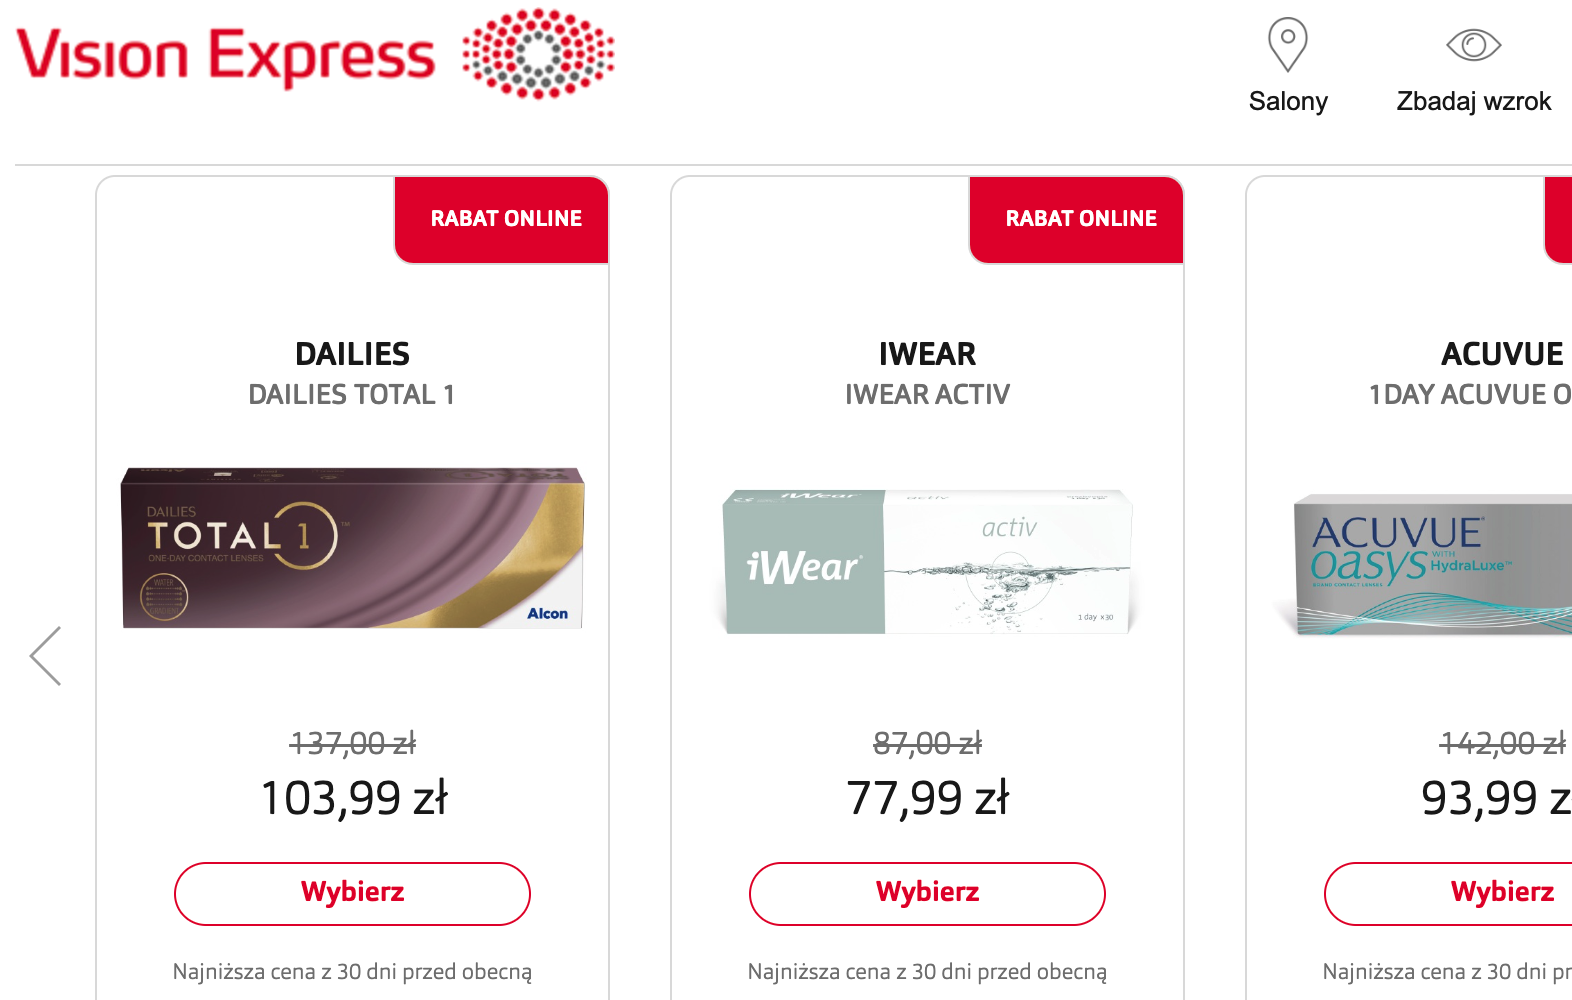 visionexpress.pl: widok sklepu internetowego